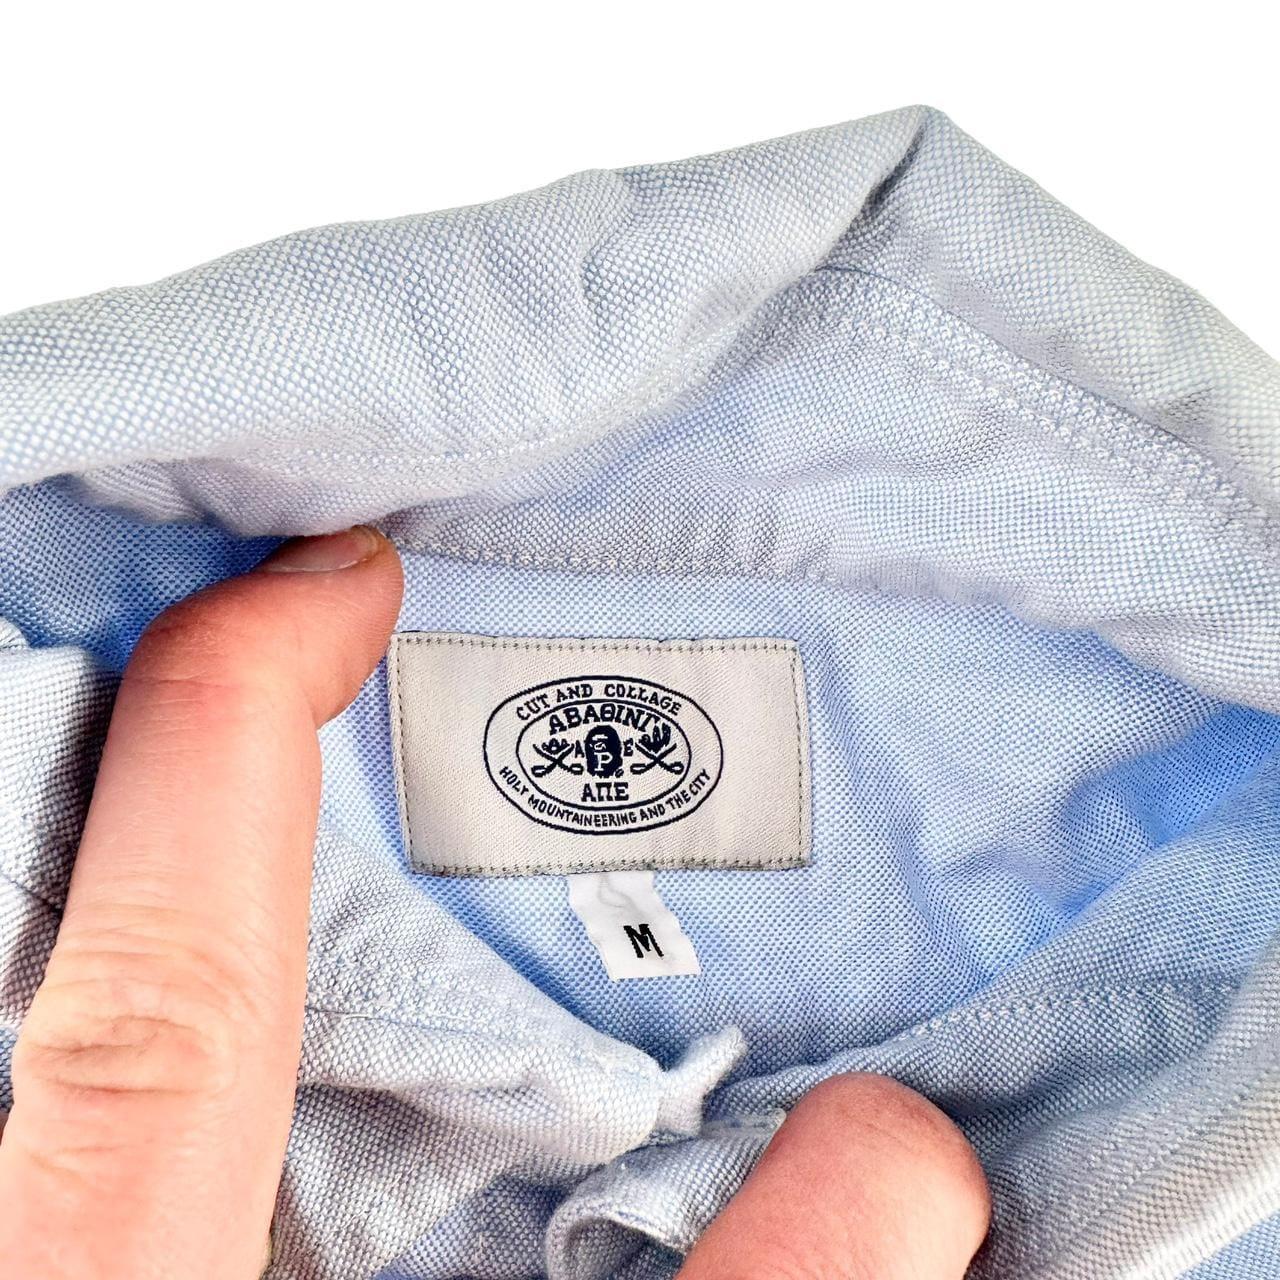 Bape college logo button long sleeve shirt size M - Known Source